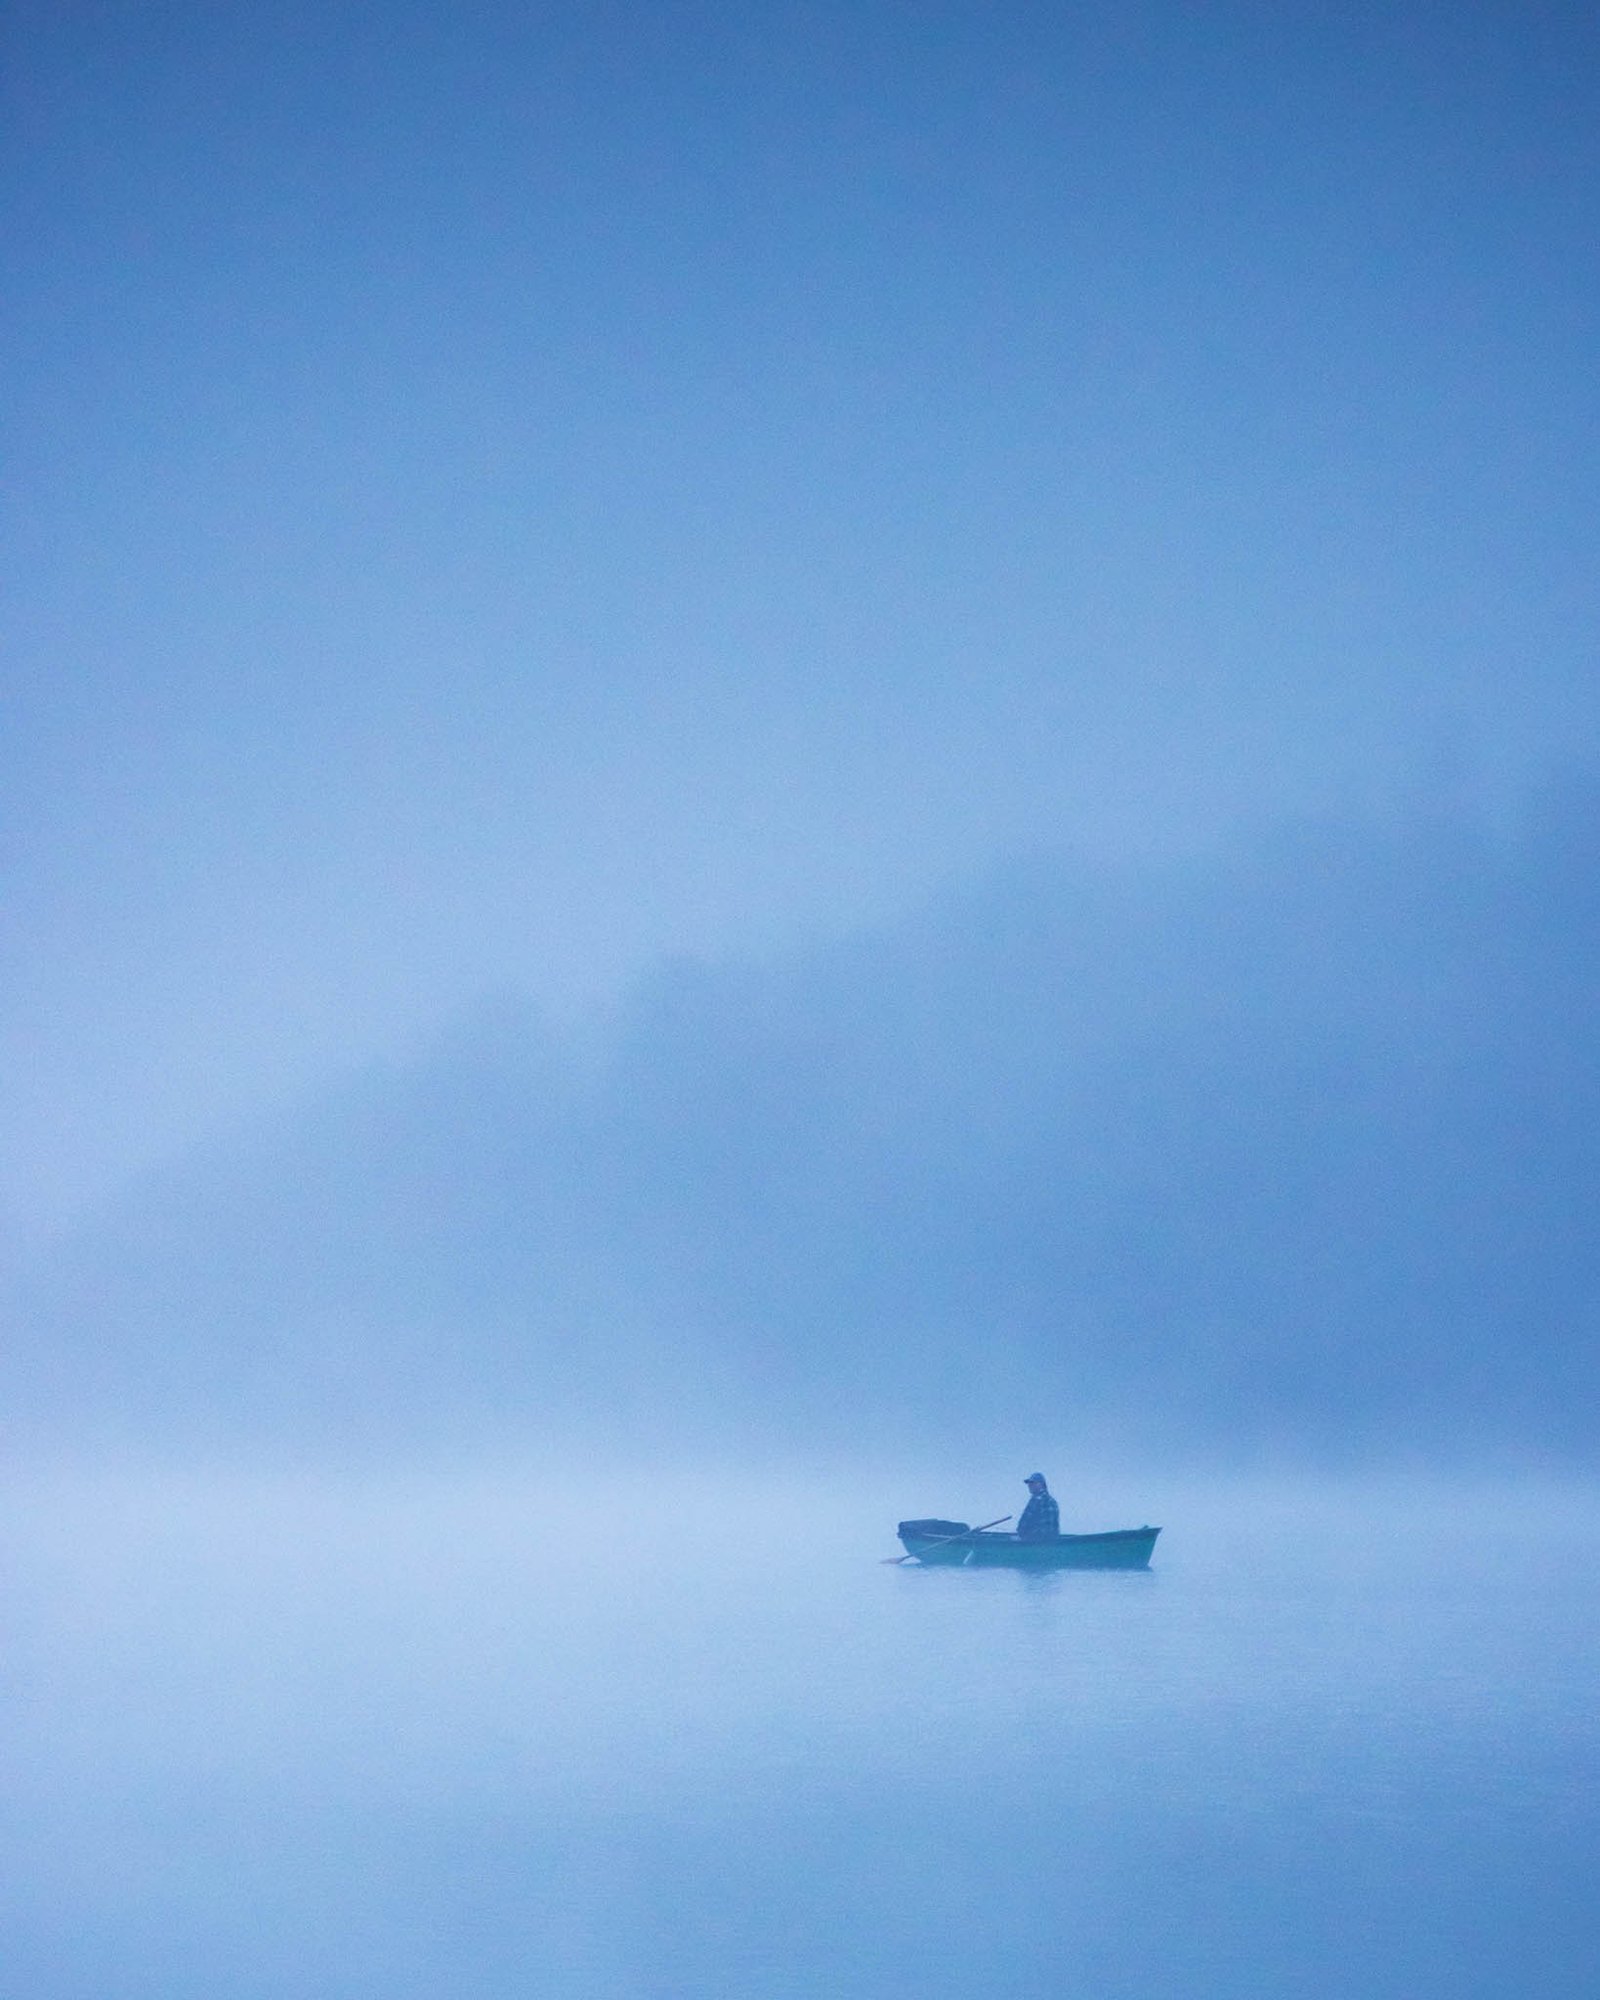 Man on boat in the morning mist at Lake Bohinj, Triglav National Park, Slovenia